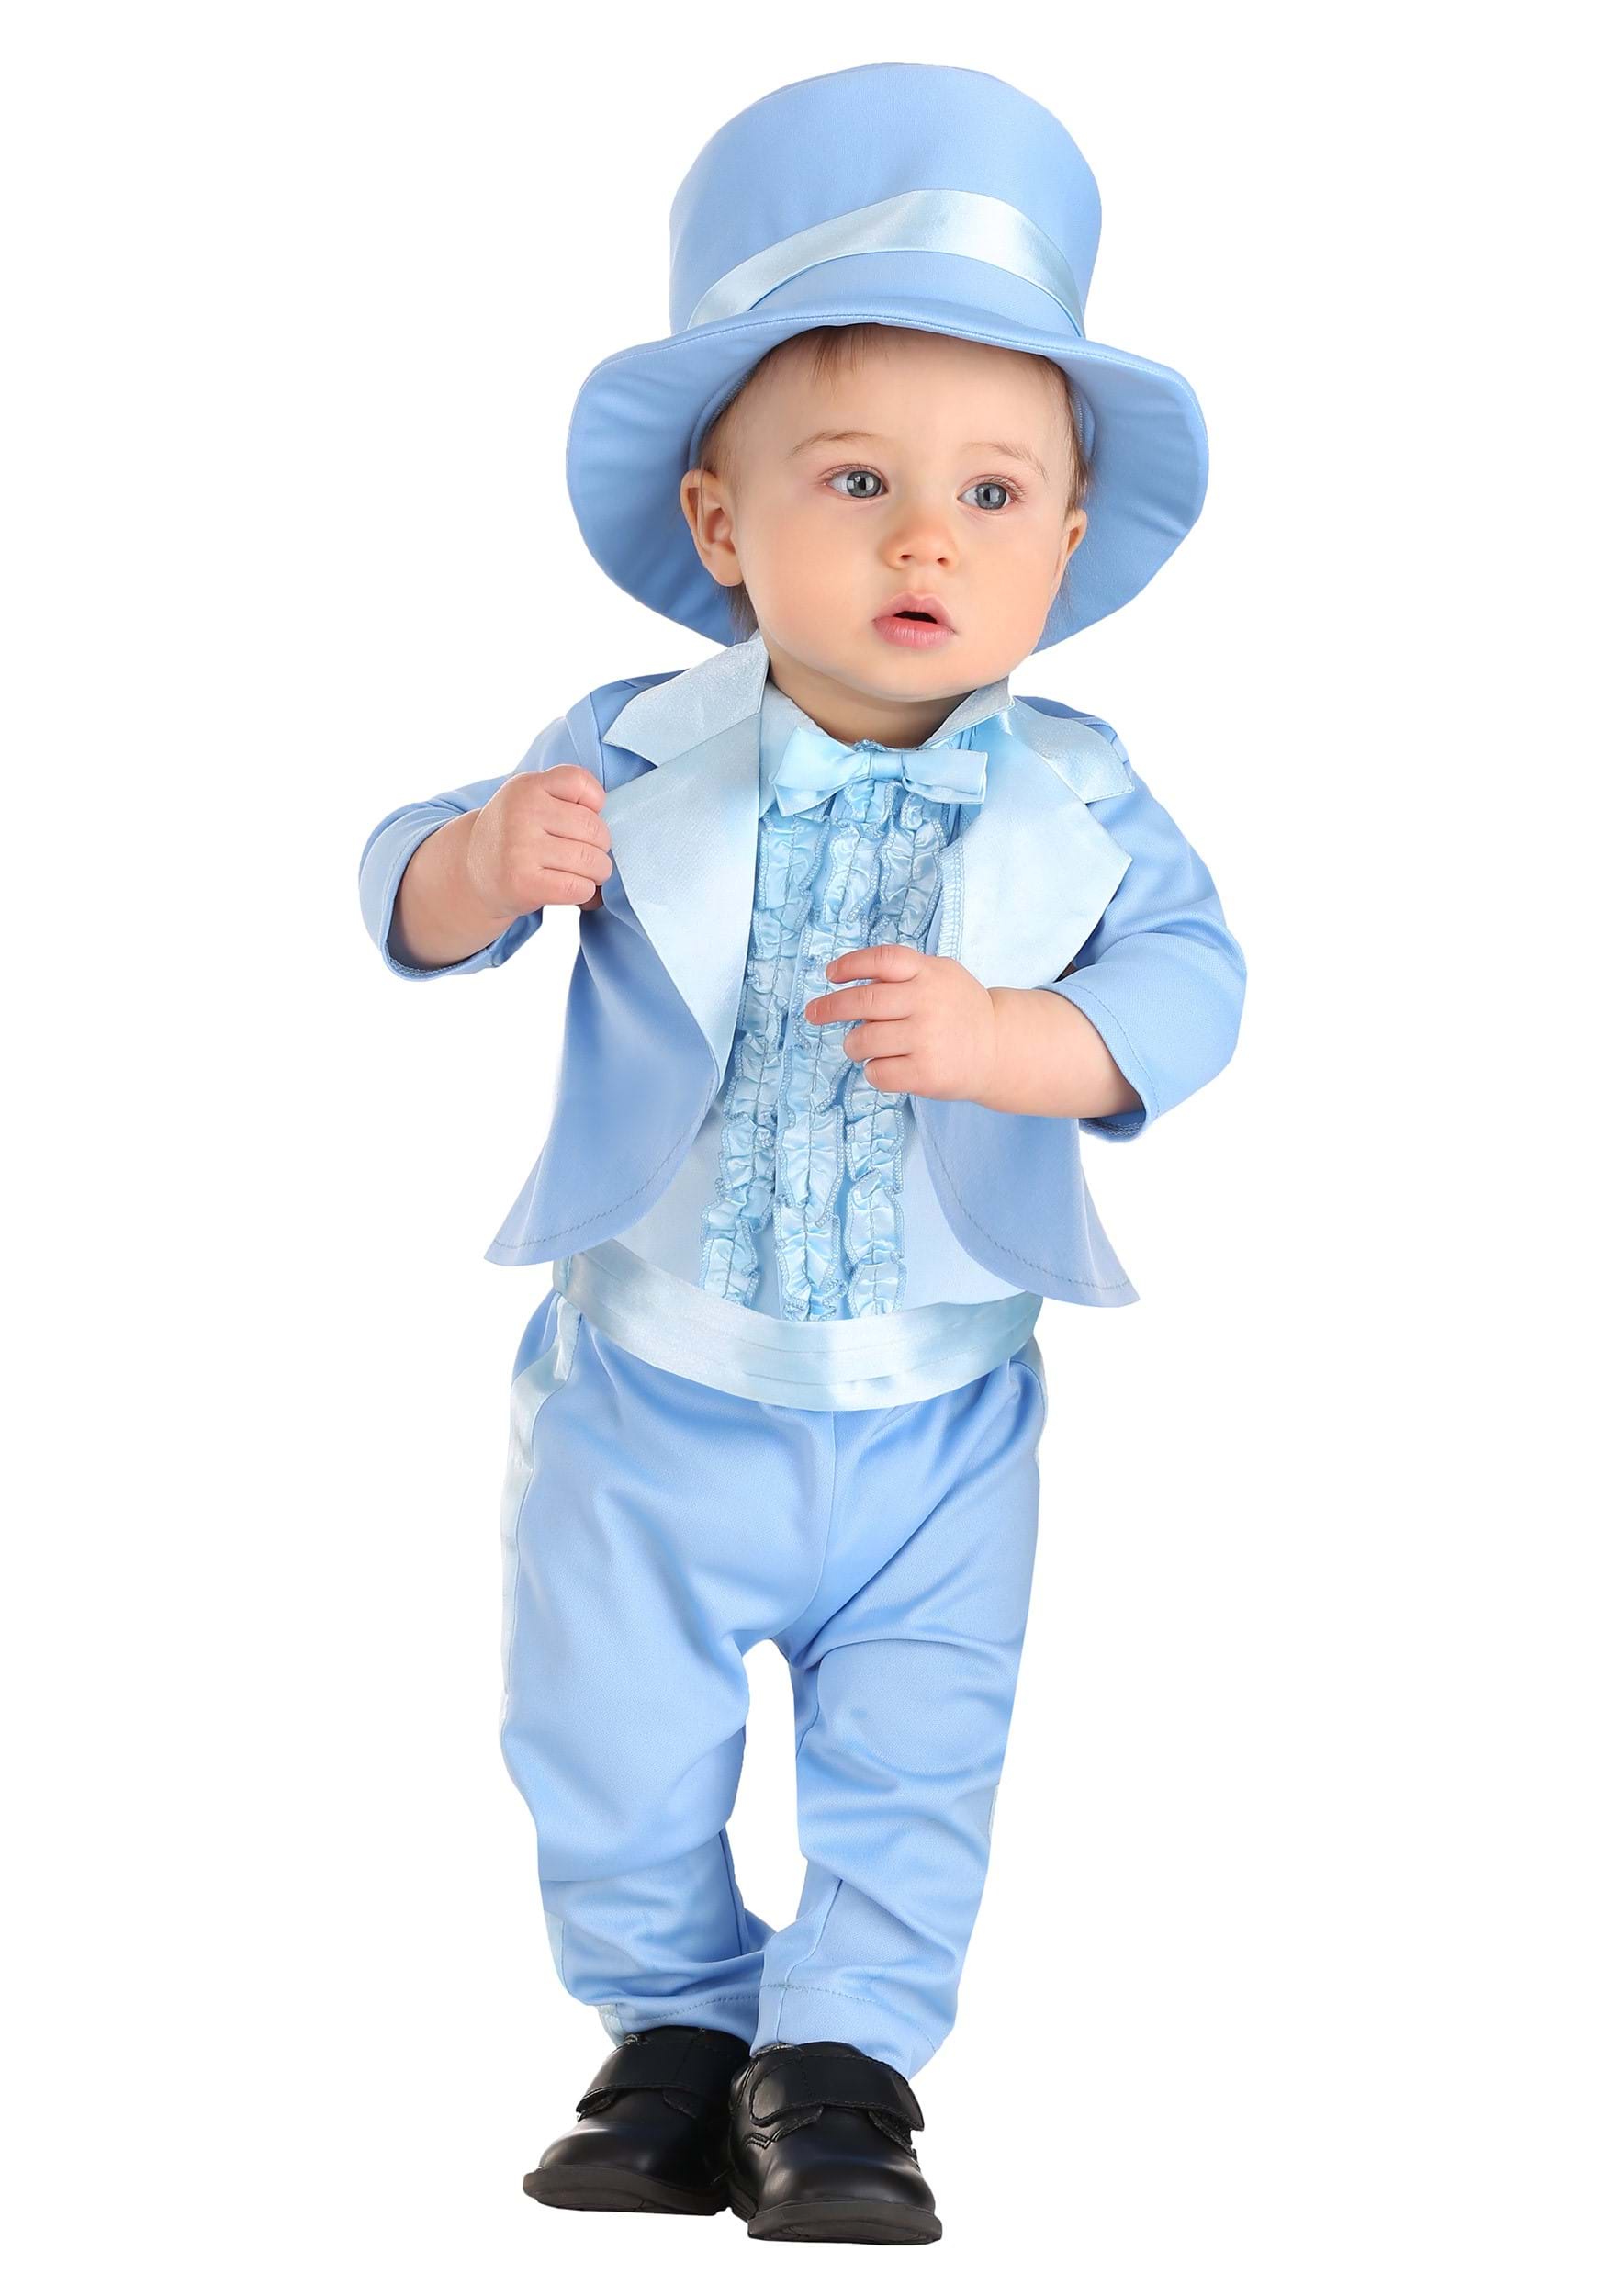 Powder Blue Baby Suit Costume